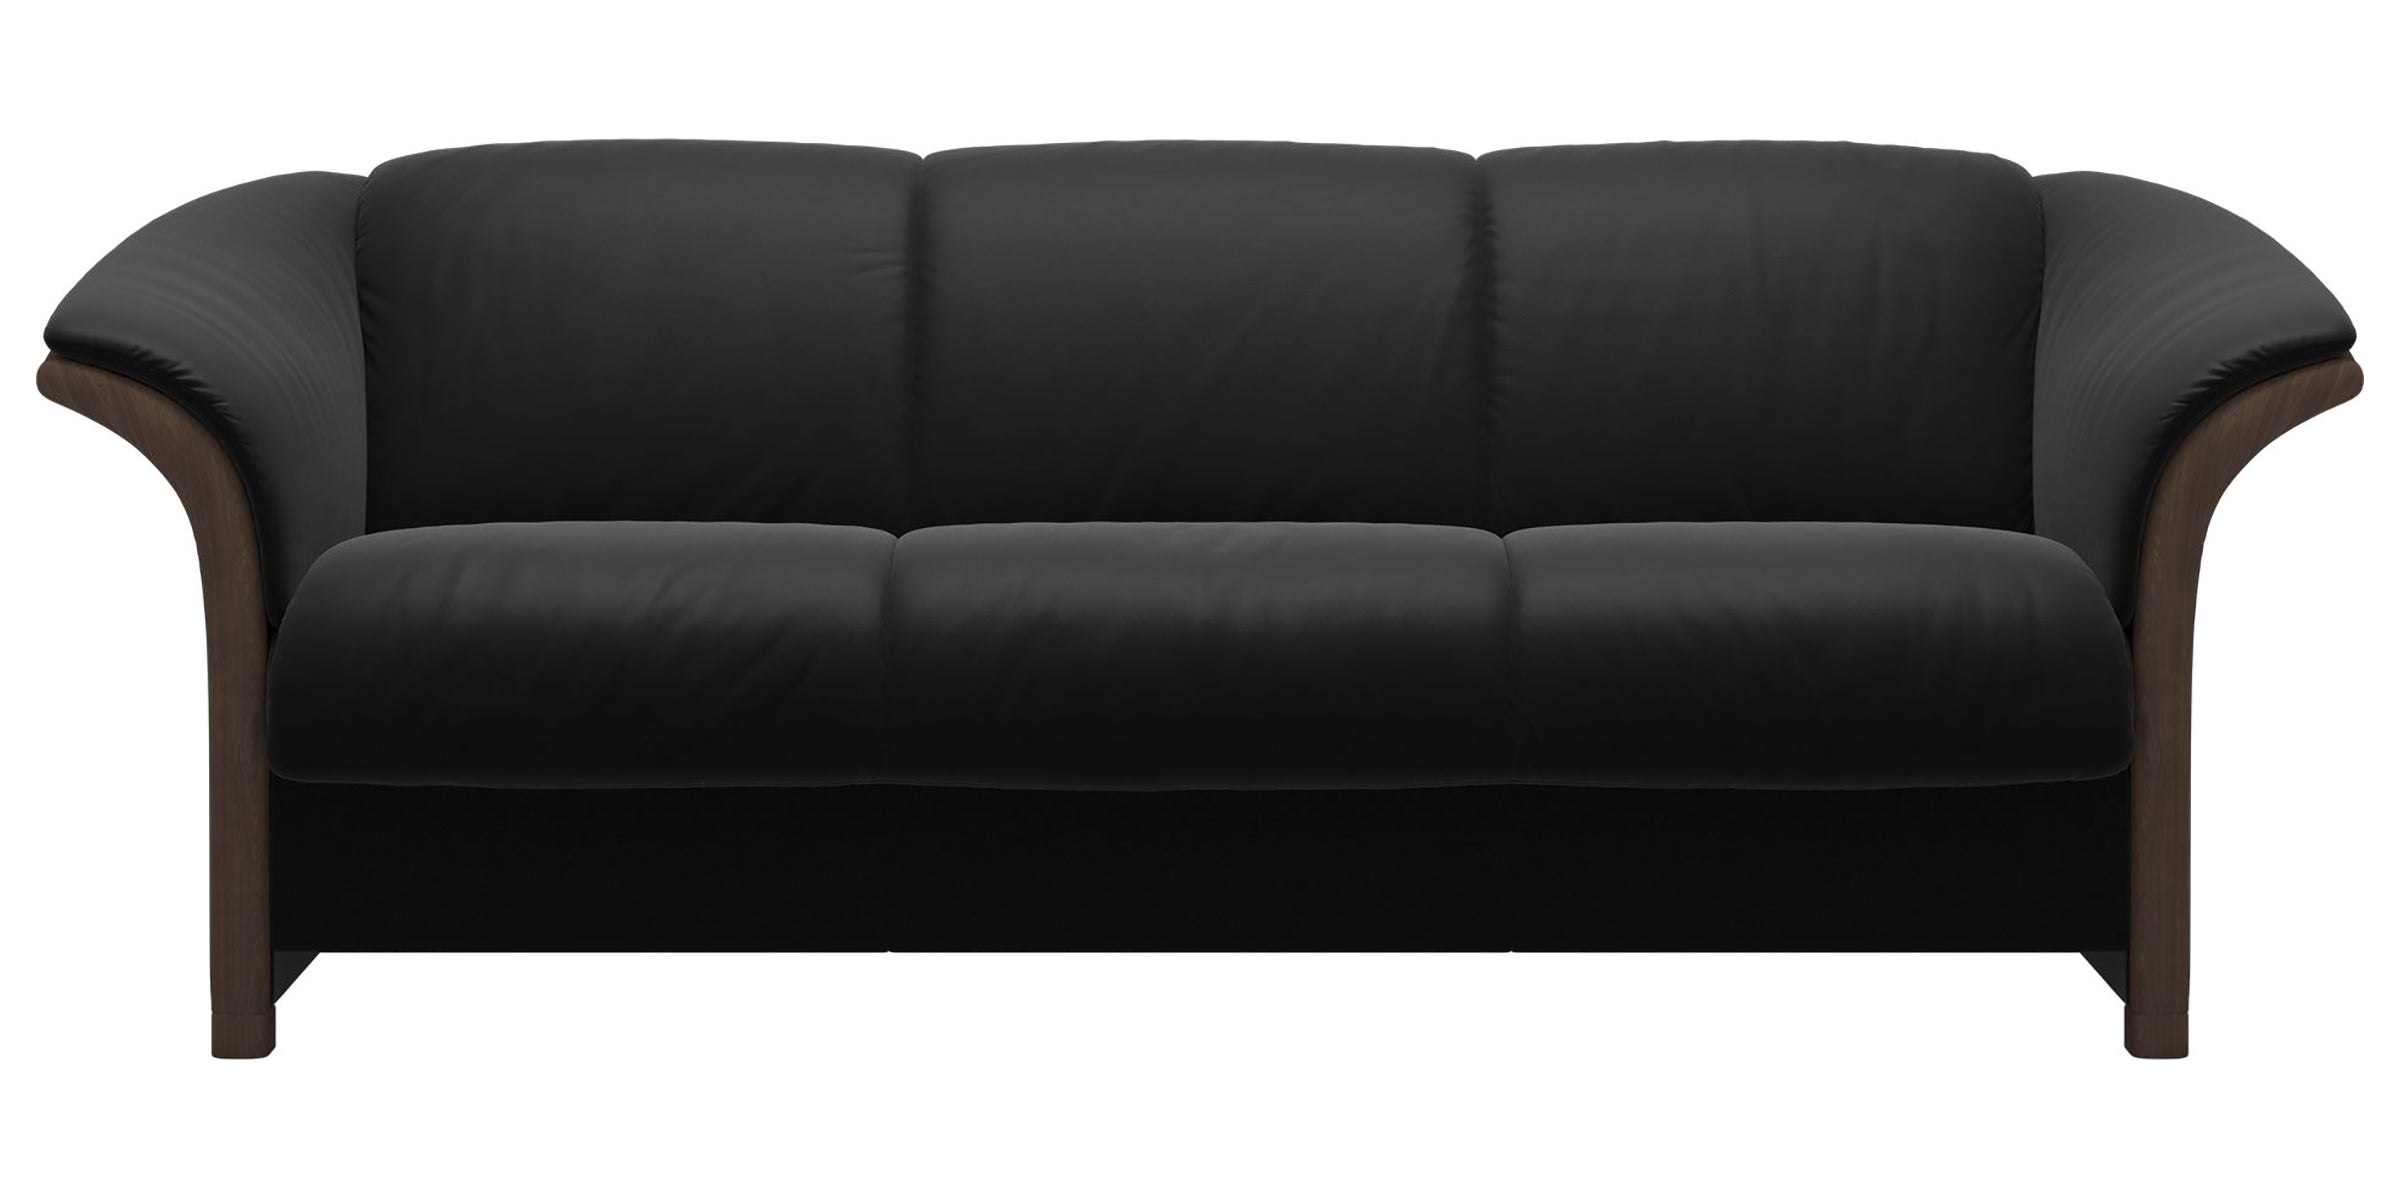 Paloma Leather Black and Walnut Arm Trim | Stressless Manhattan Sofa | Valley Ridge Furniture